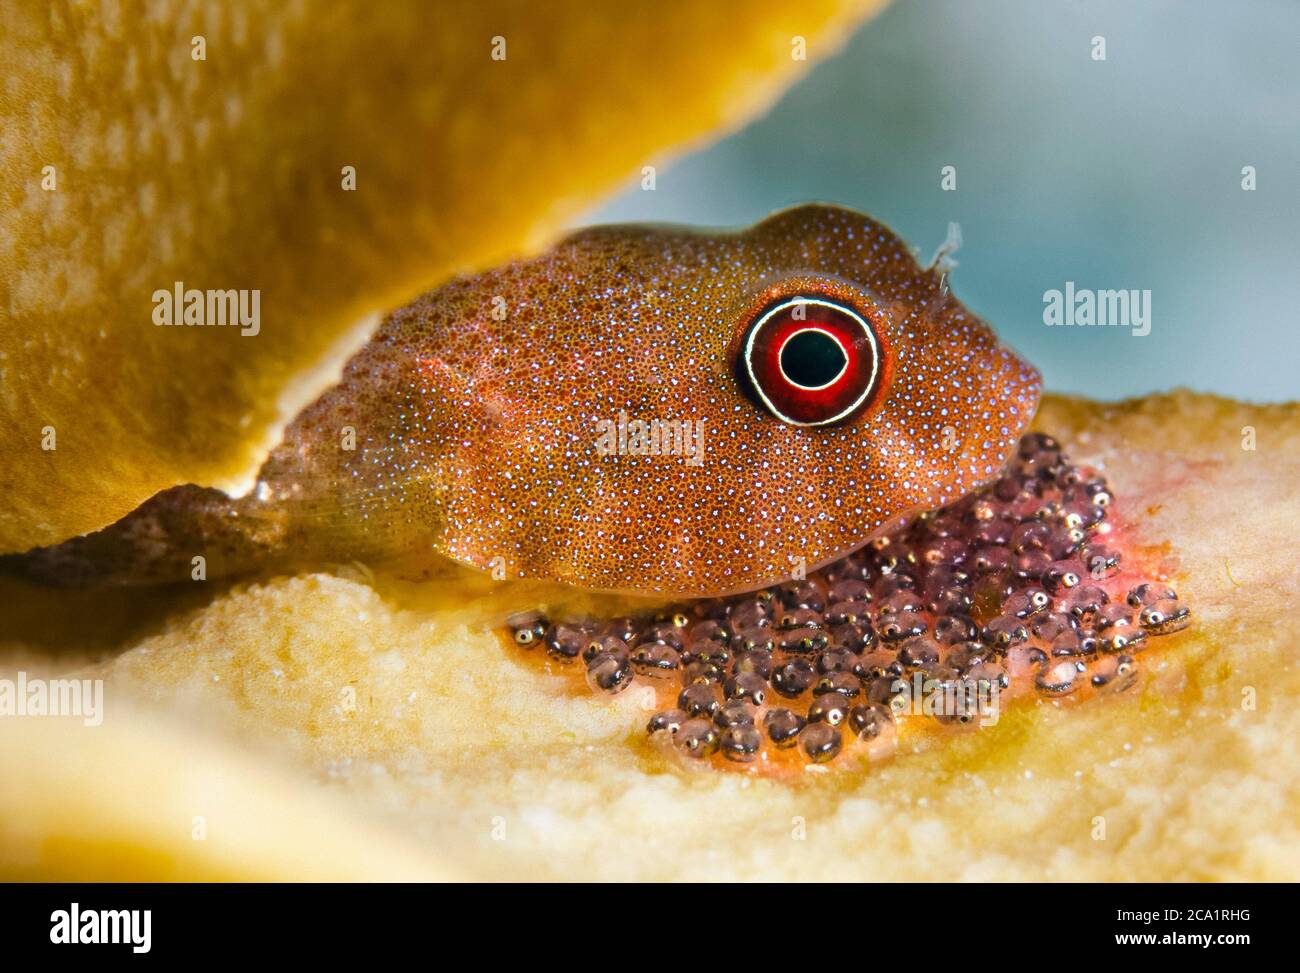 Rote clingfish, Acyrtus rubiginosus, bewacht seine Eier, Bonaire, ABC-Inseln, Karibik Niederlande, Karibik, Atlantik Stockfoto